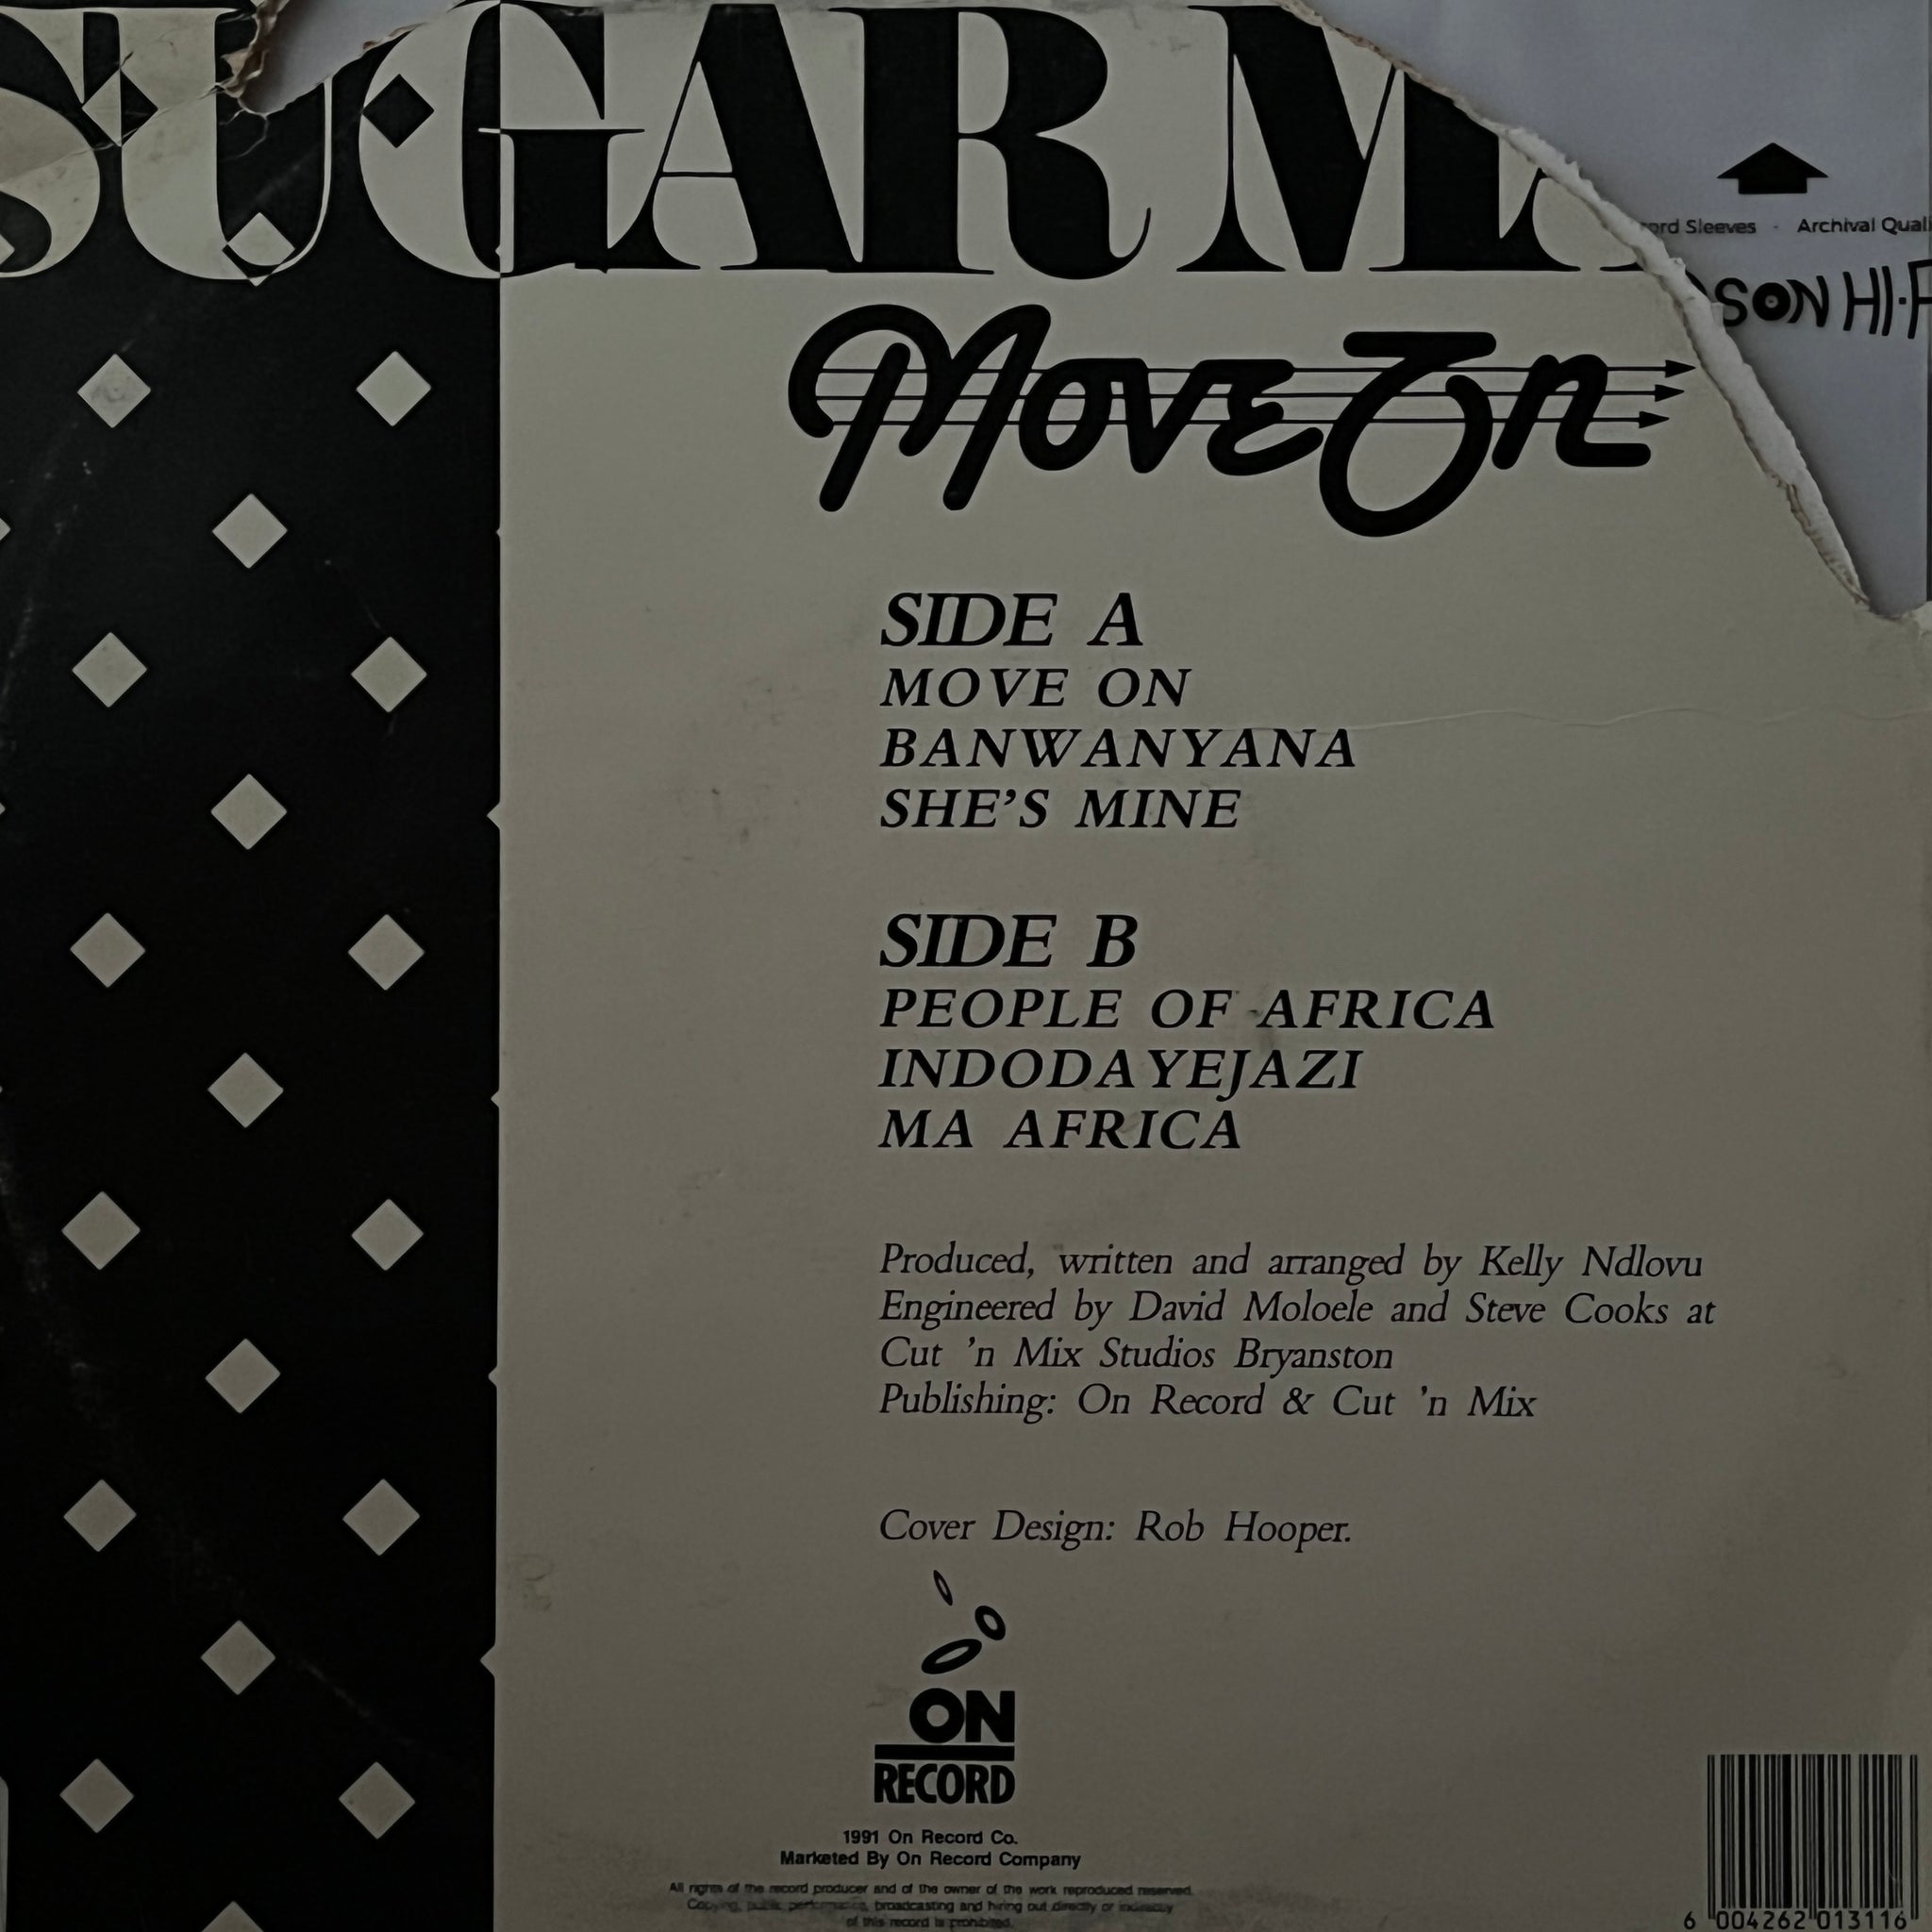 Sugar Man - Move On